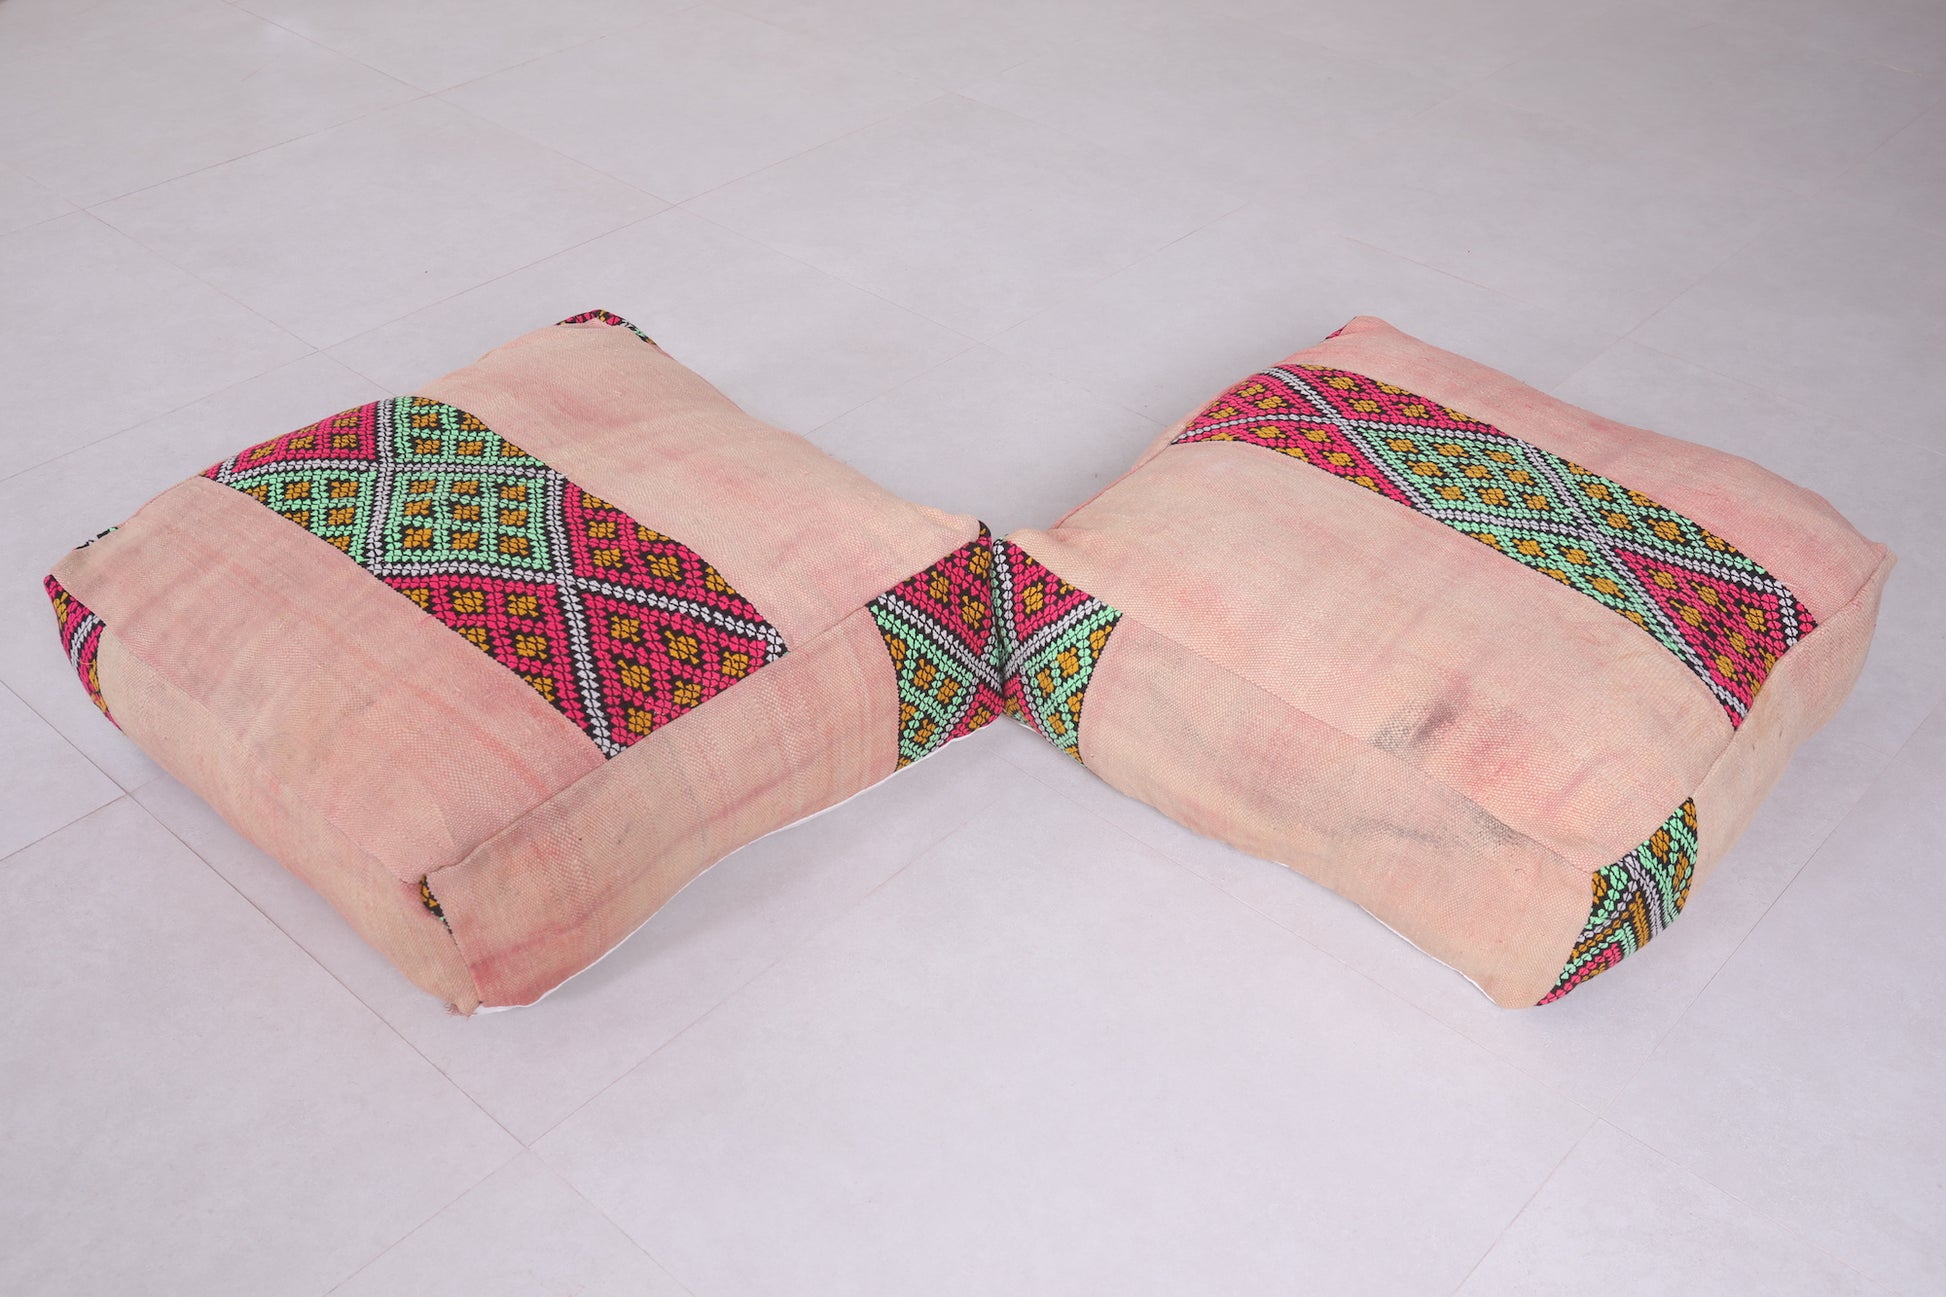 Two Handmade berber Moroccan Kilim Poufs